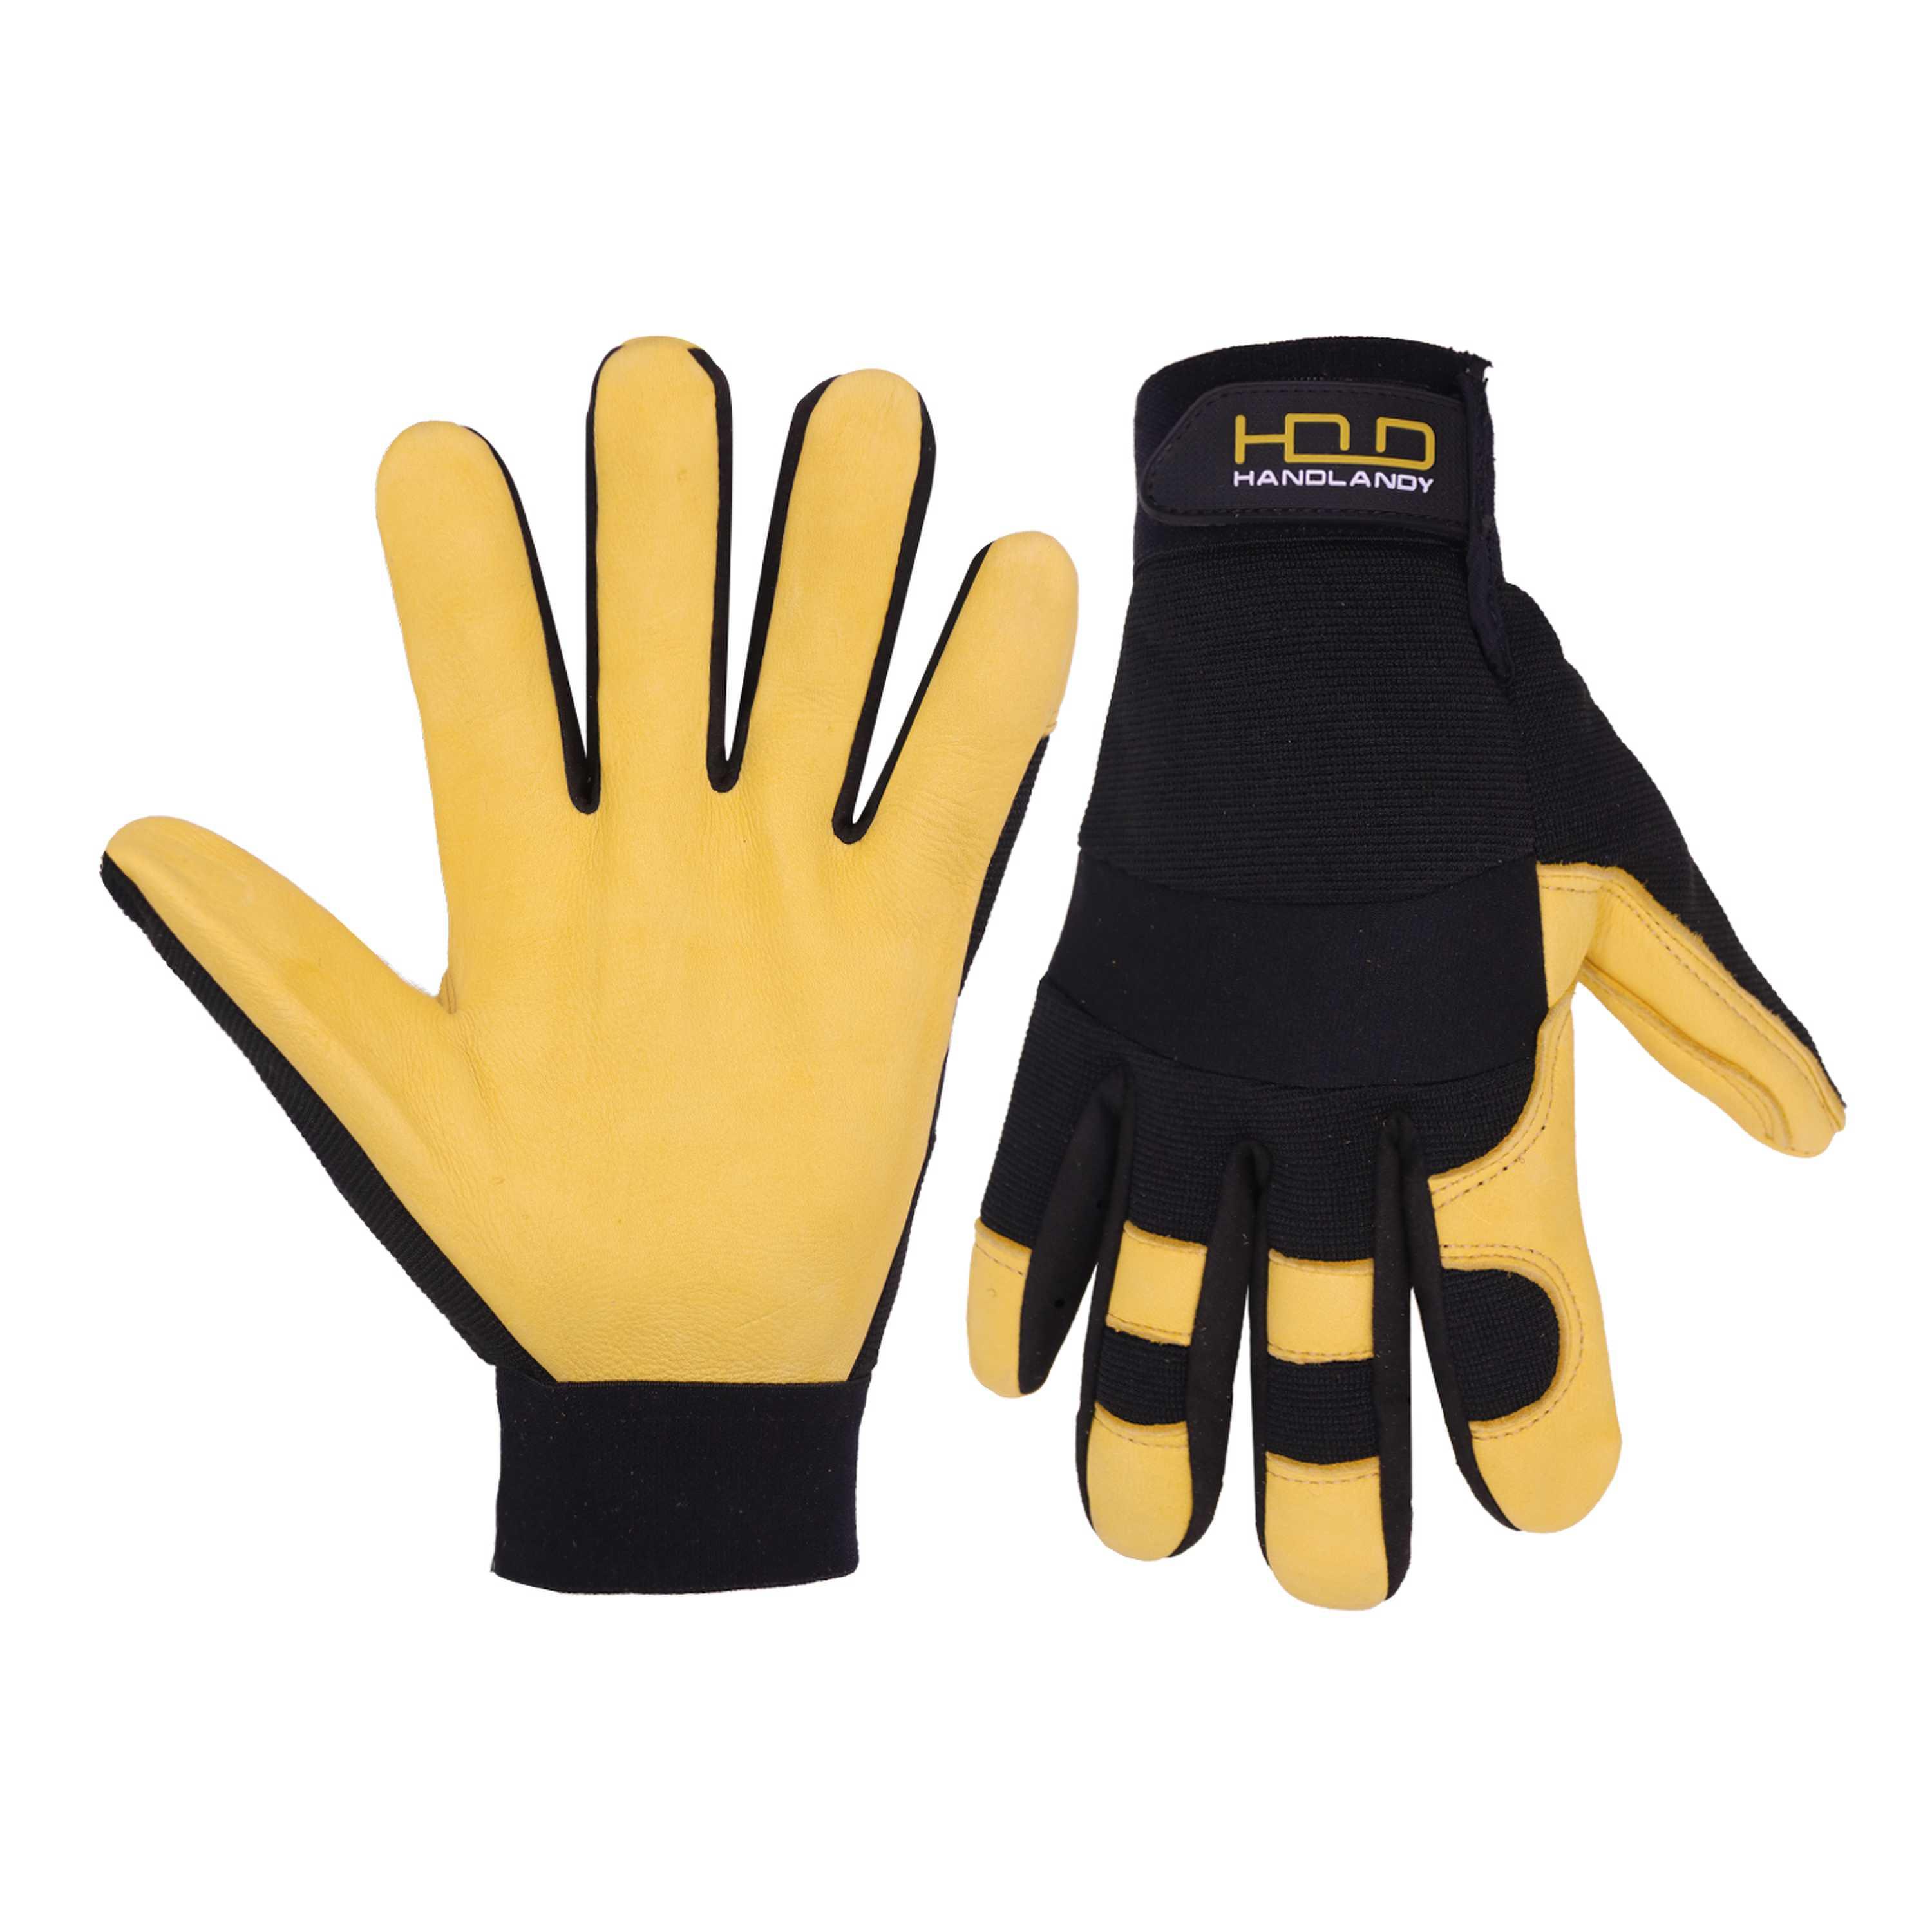 6144 PRISAFETY Premium Grain Leather Work Driver Gloves Industrial Construction Deerskin Safety Working Gloves